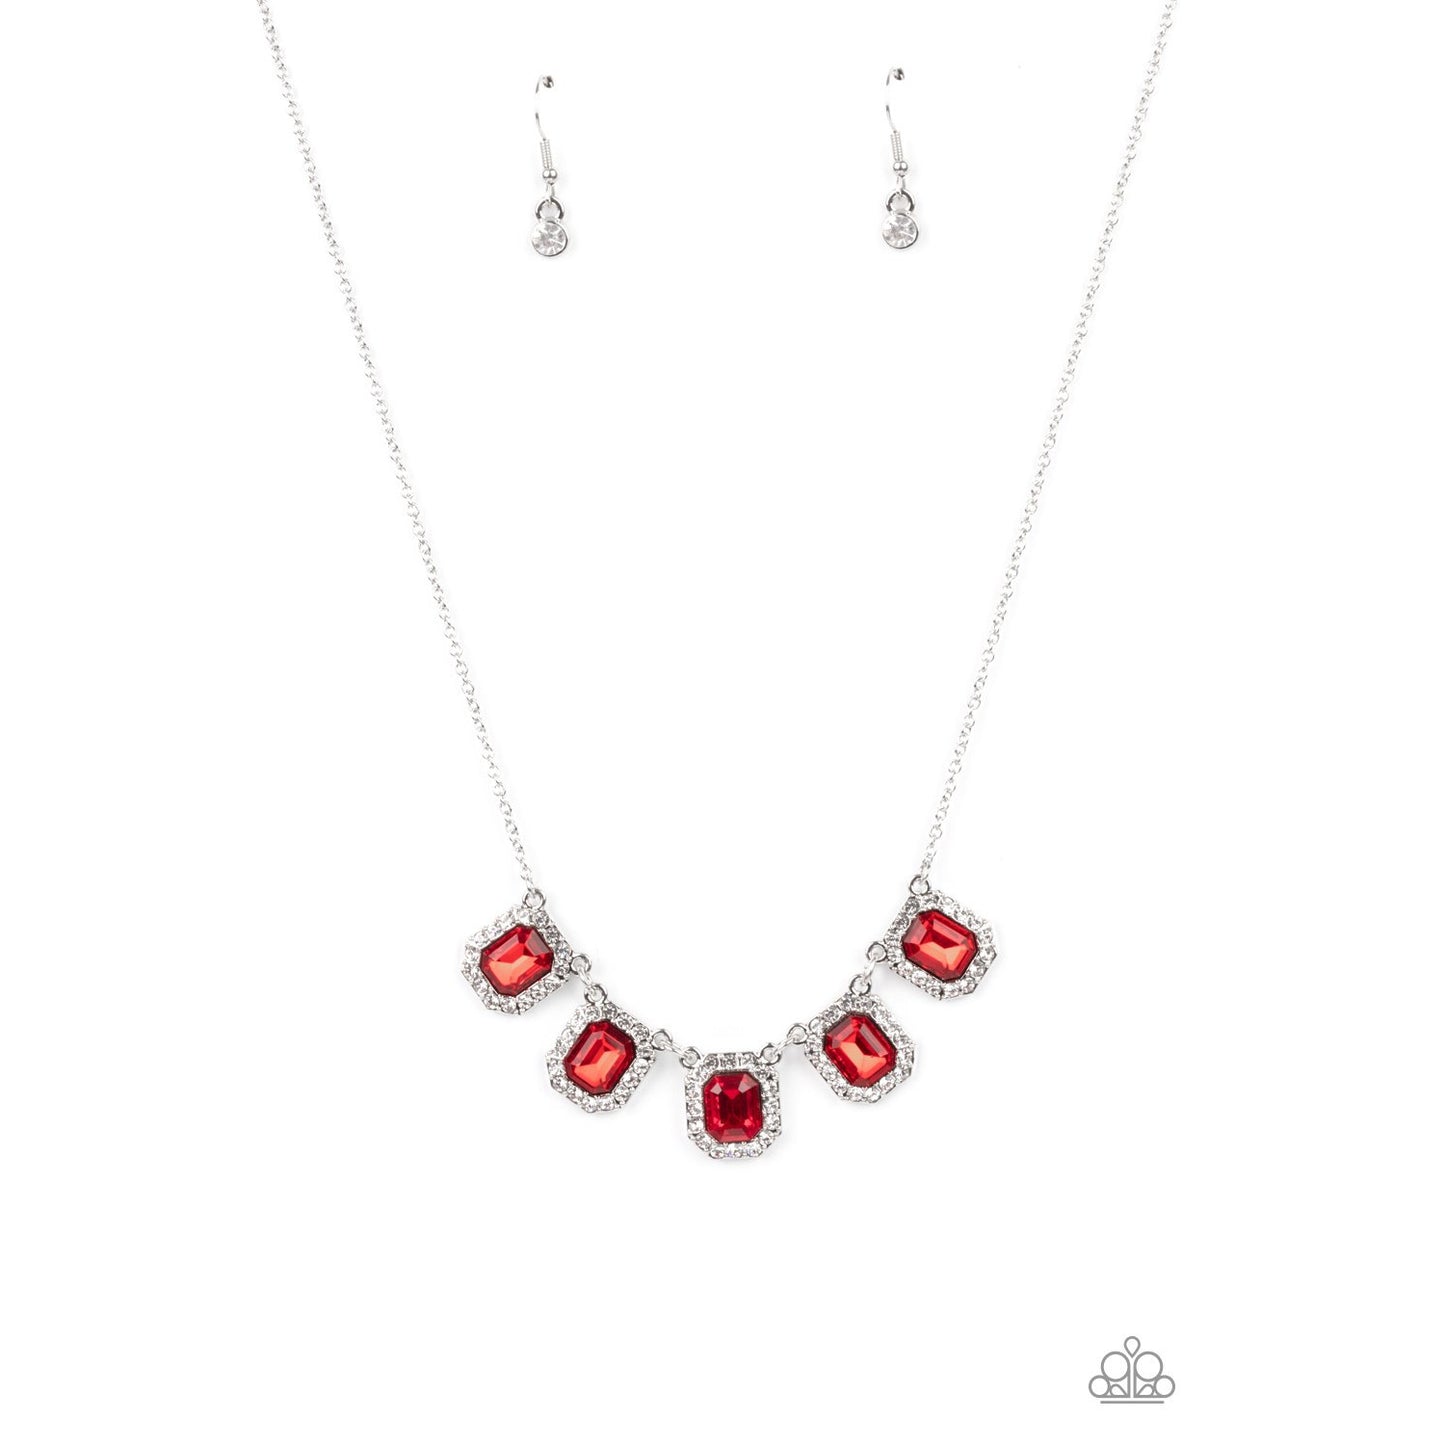 Next Level Luster - Red Rhinestone Necklace - Paparazzi Accessories - GlaMarous Titi Jewels